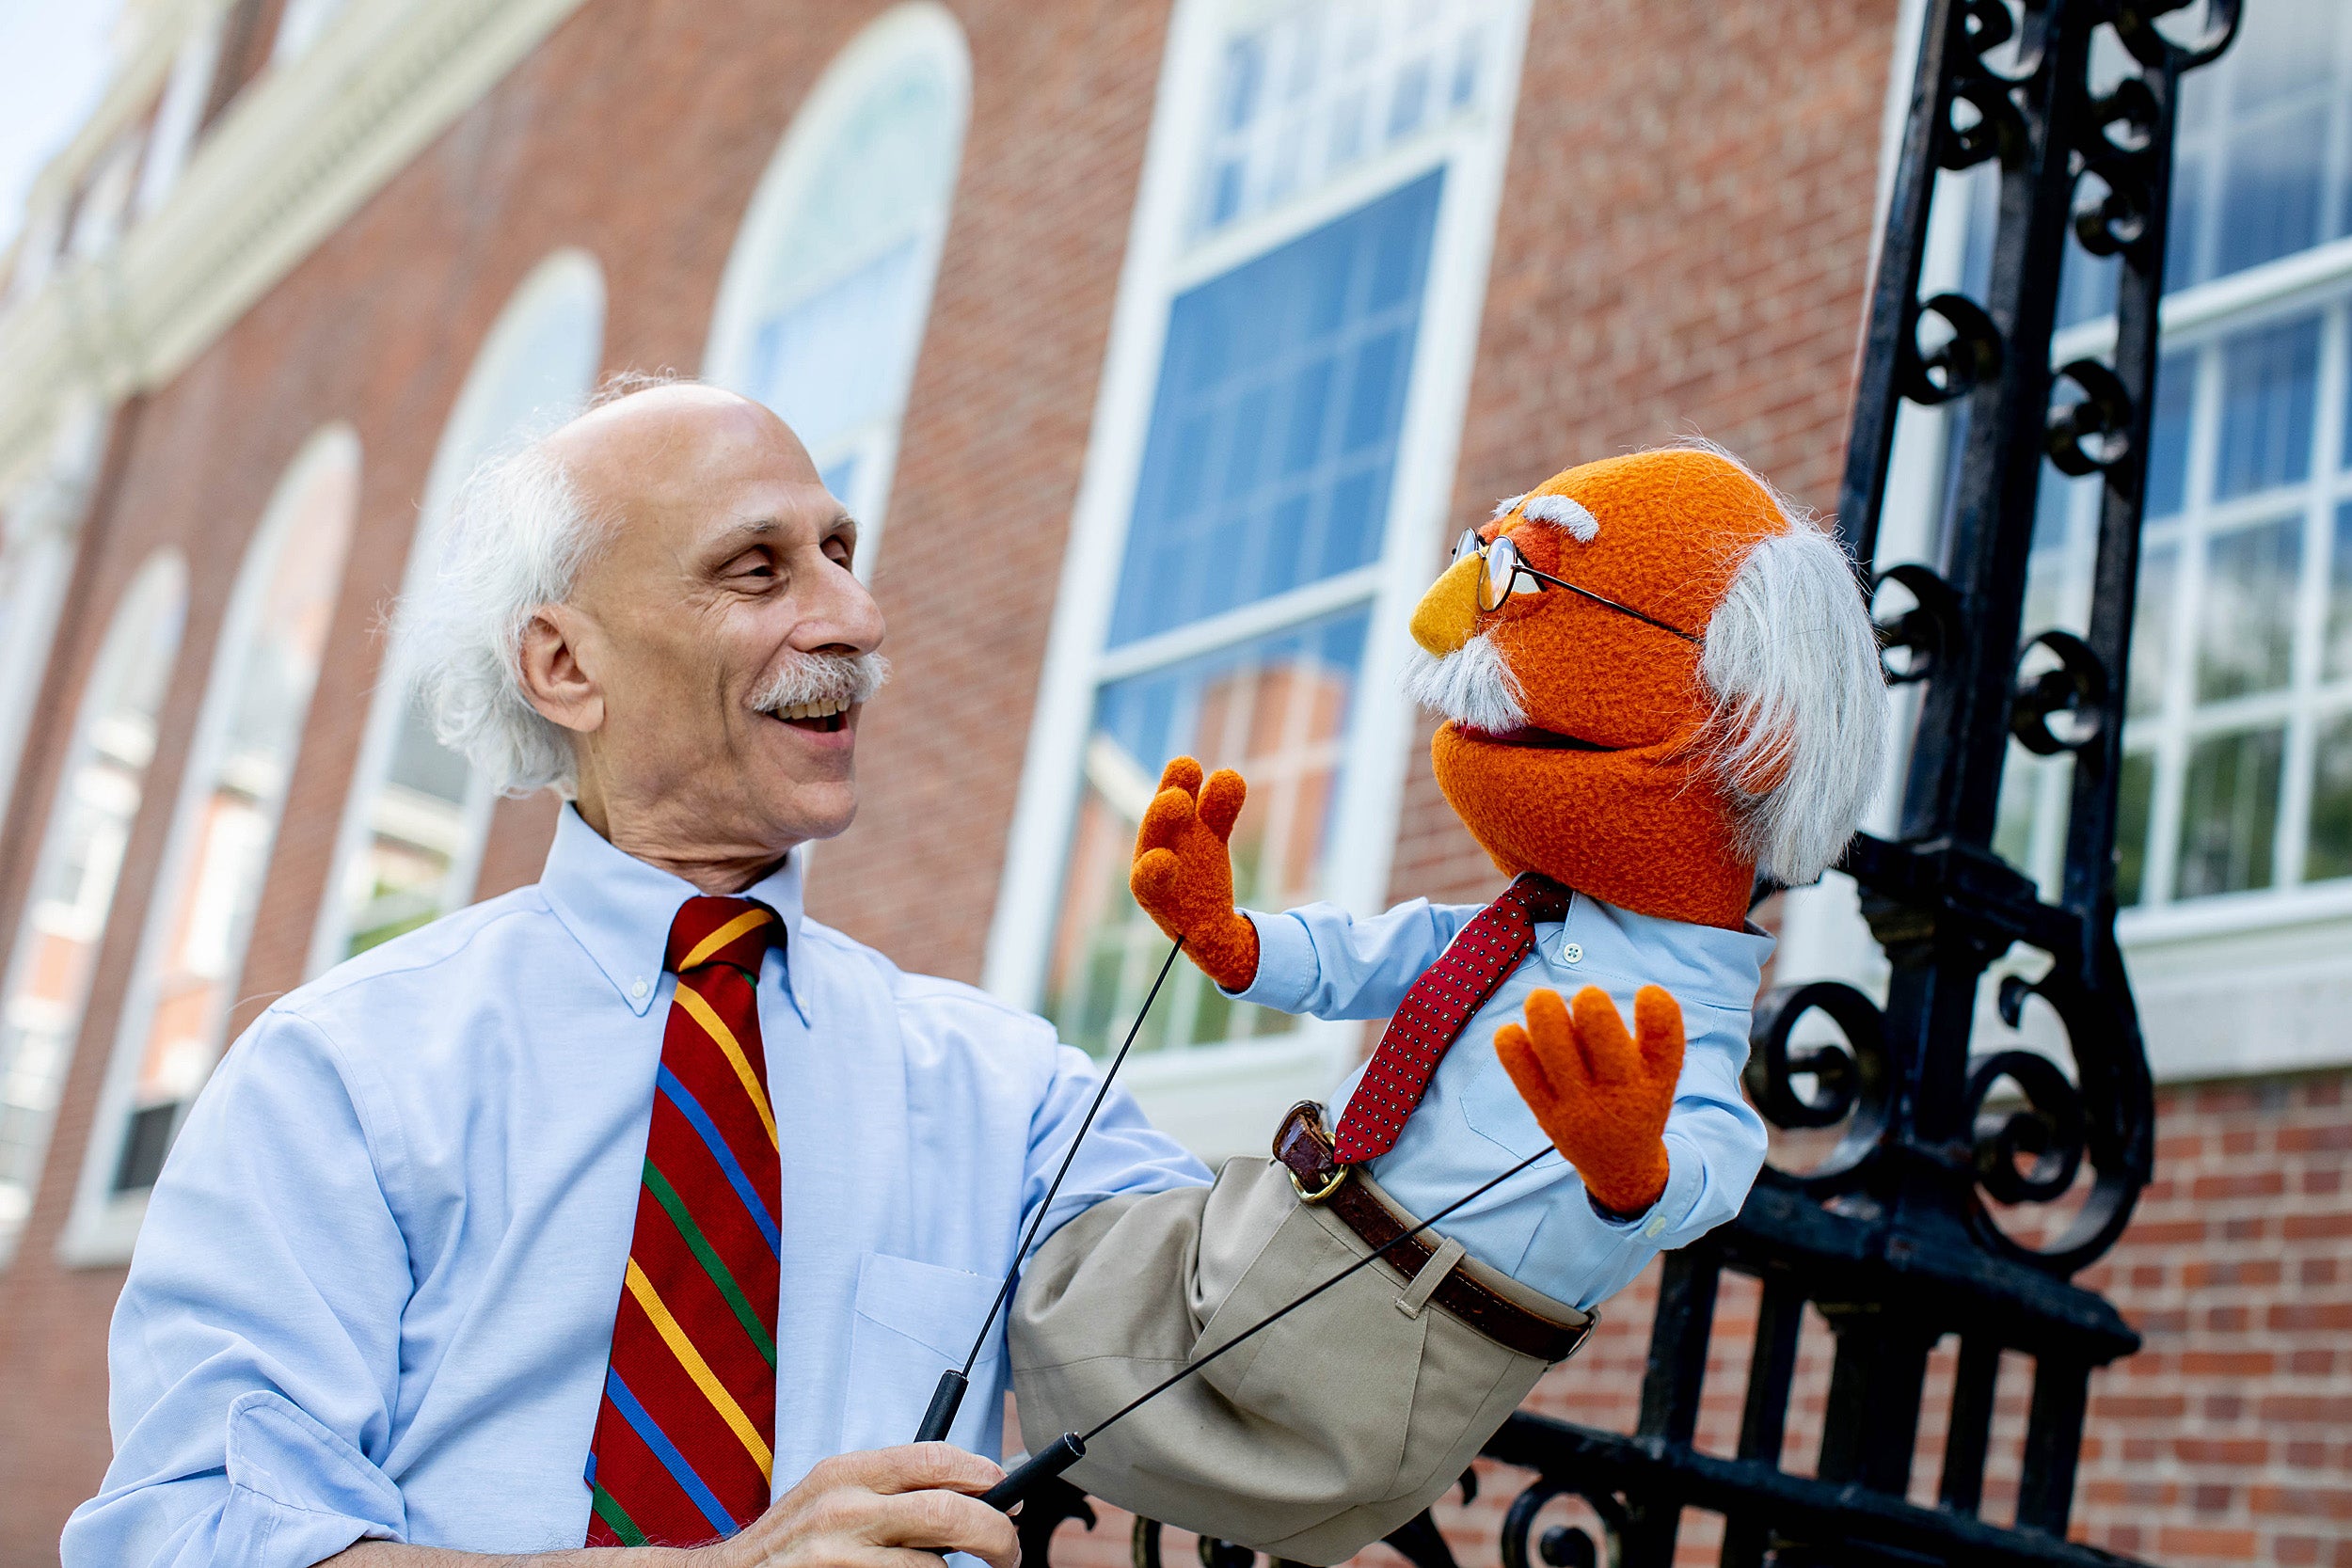 Blatt with his muppet